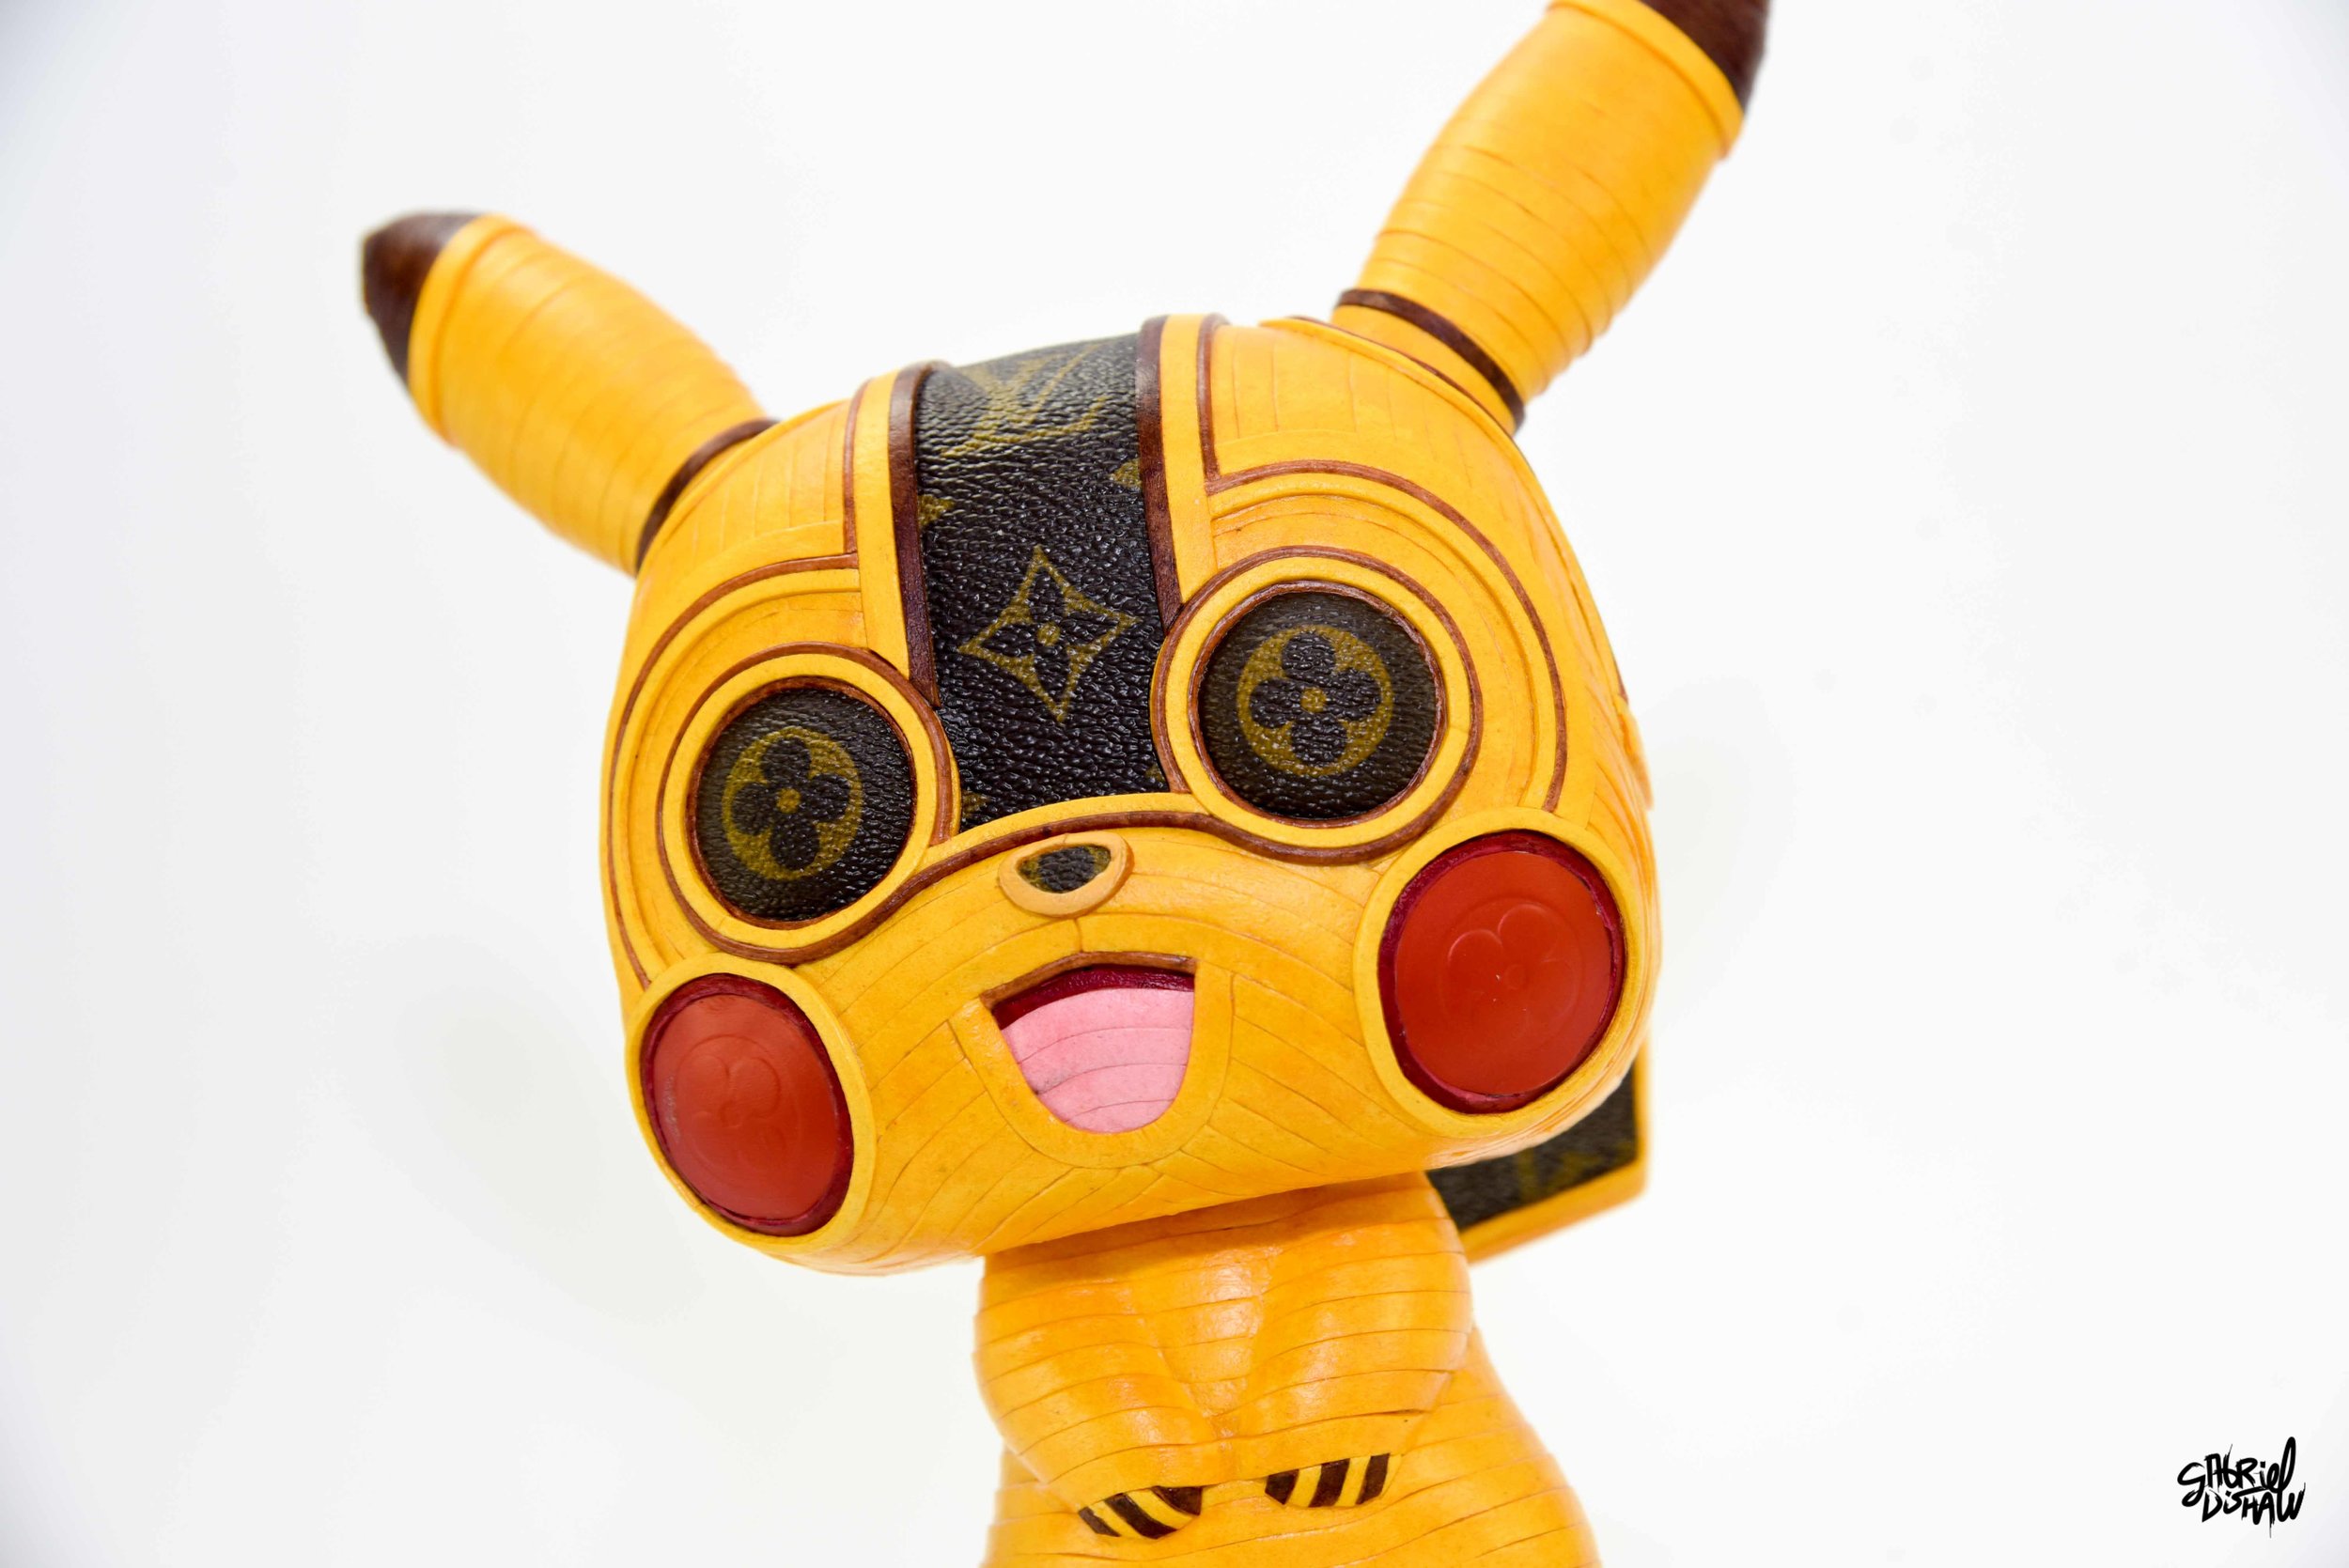 Gucci inspired Pikachu Pokémon — Gabriel Dishaw